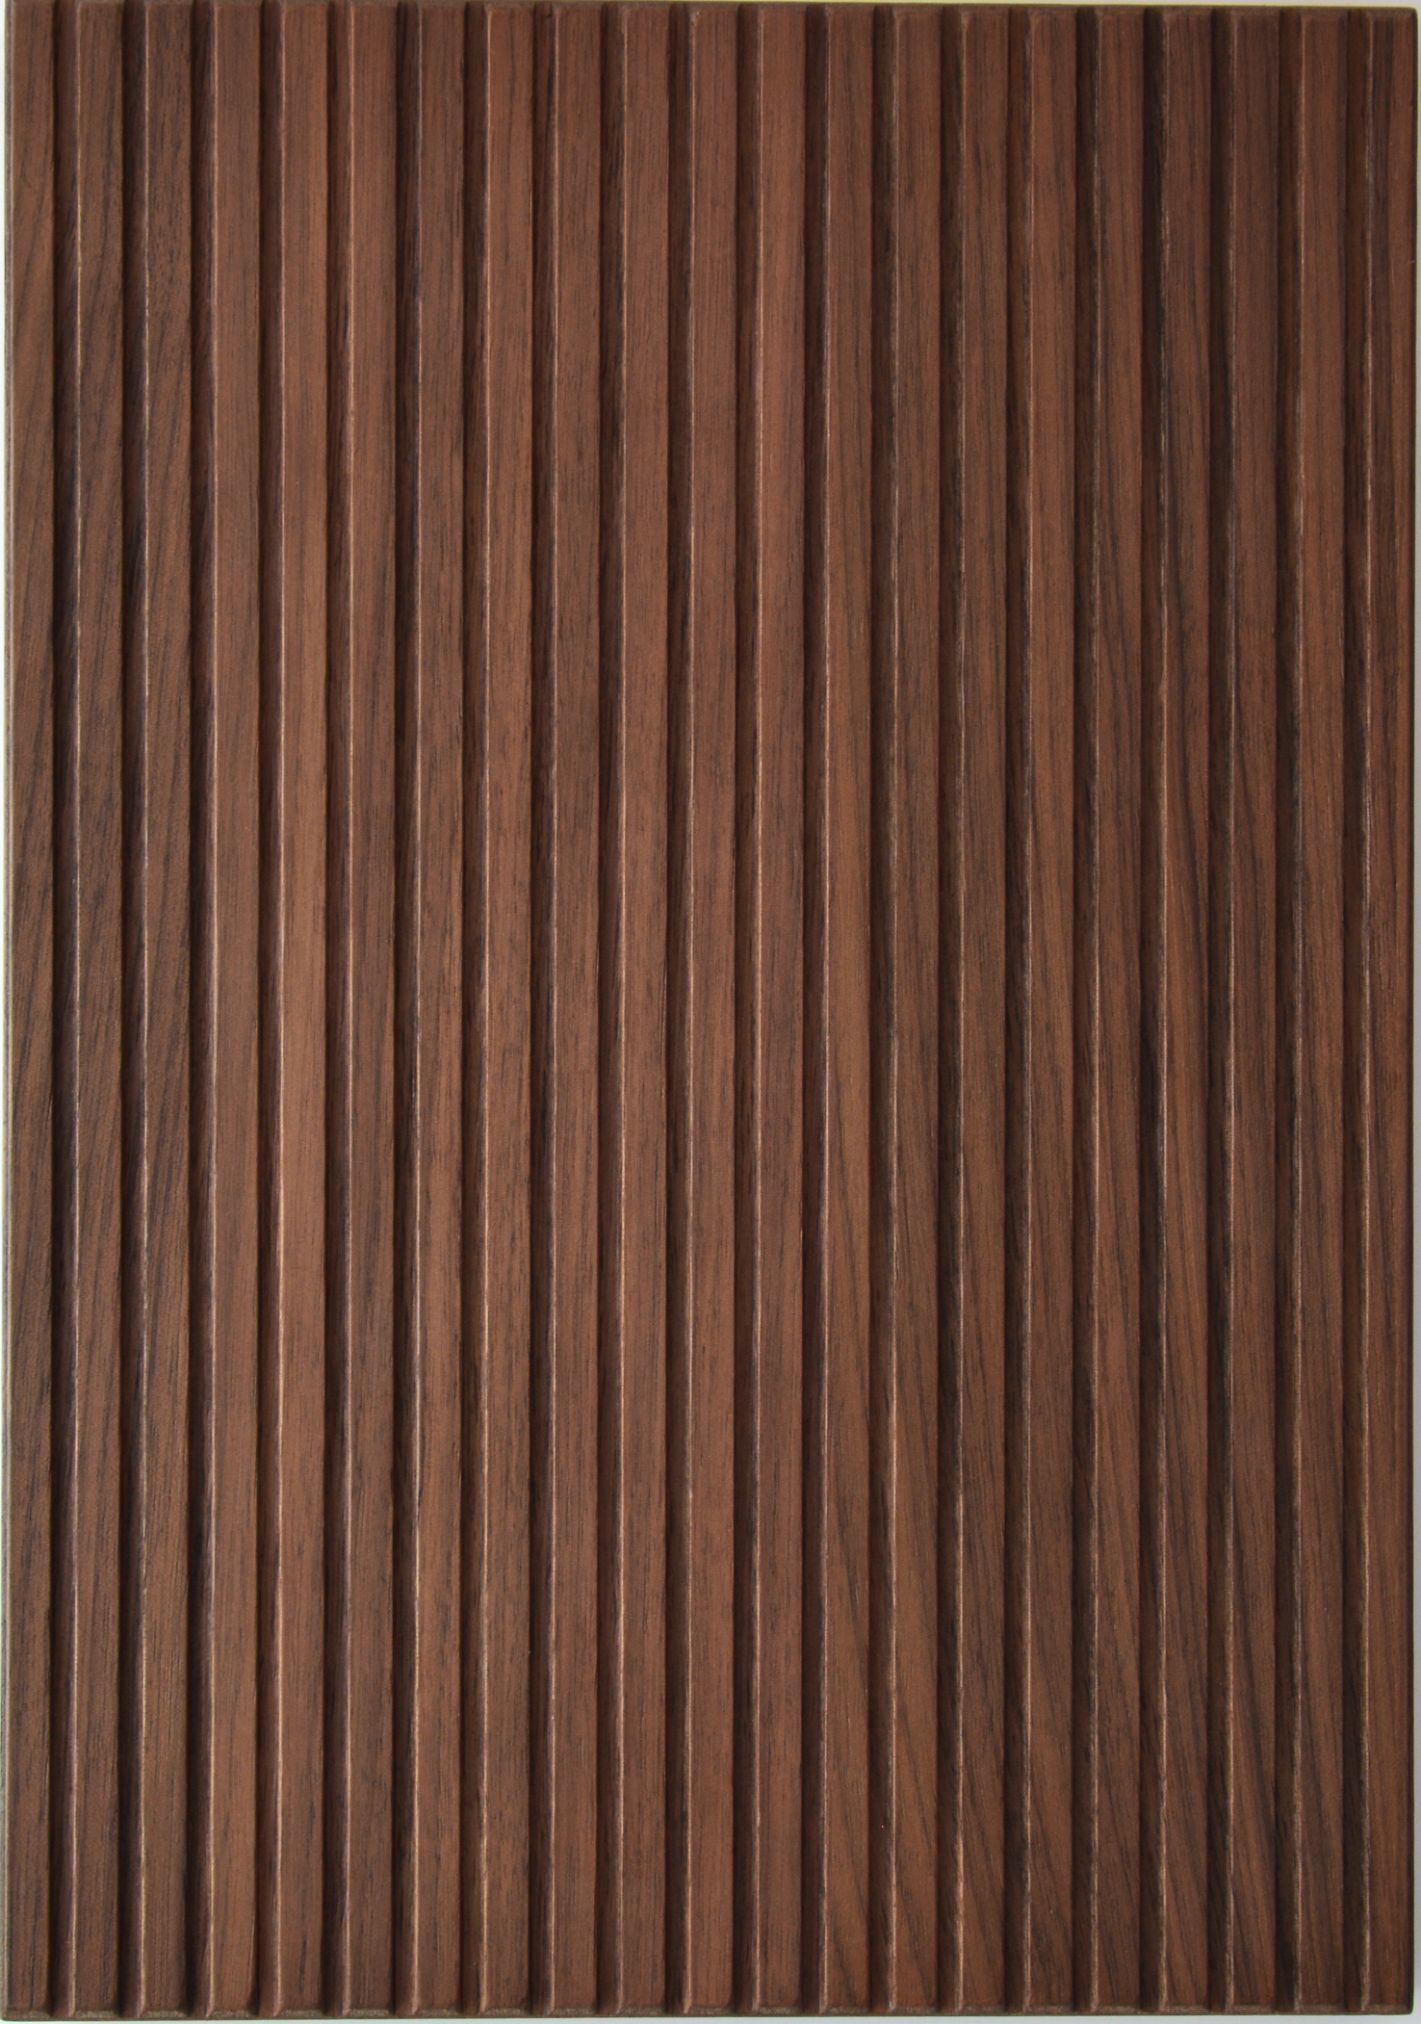 2651 - Stripes - Heartwood walnut - Real wood veneer